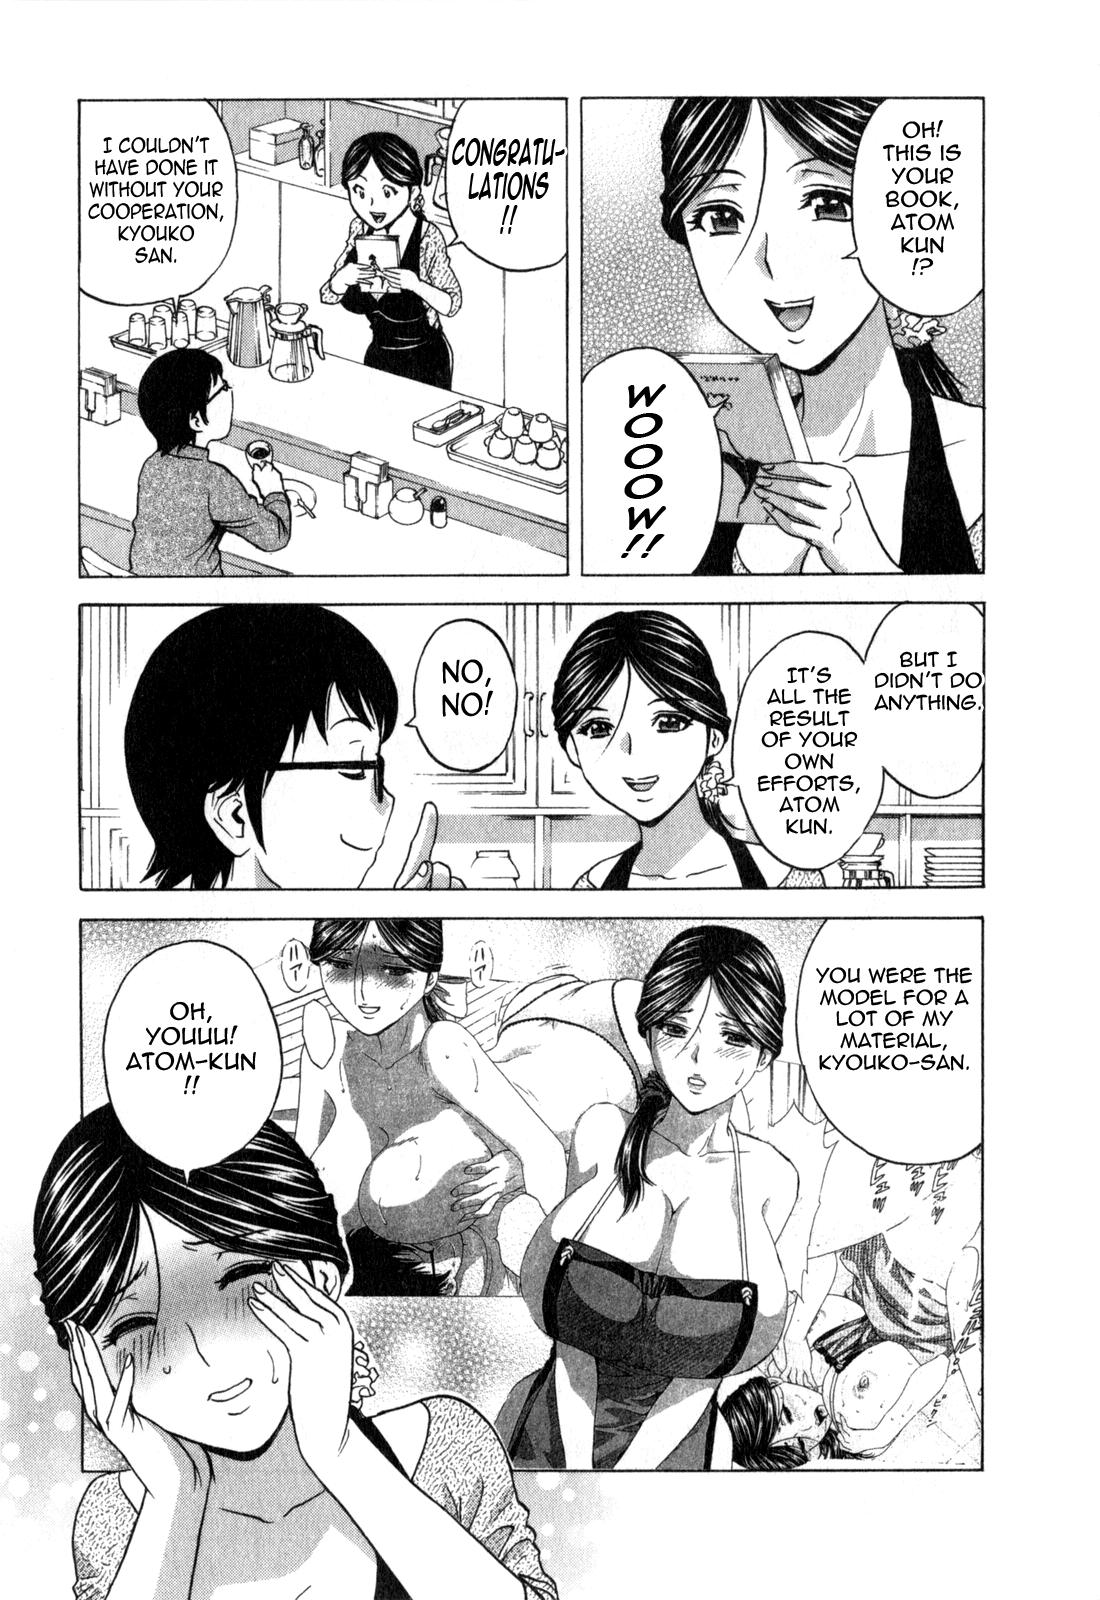 Life with Married Women Just Like a Manga 3 15